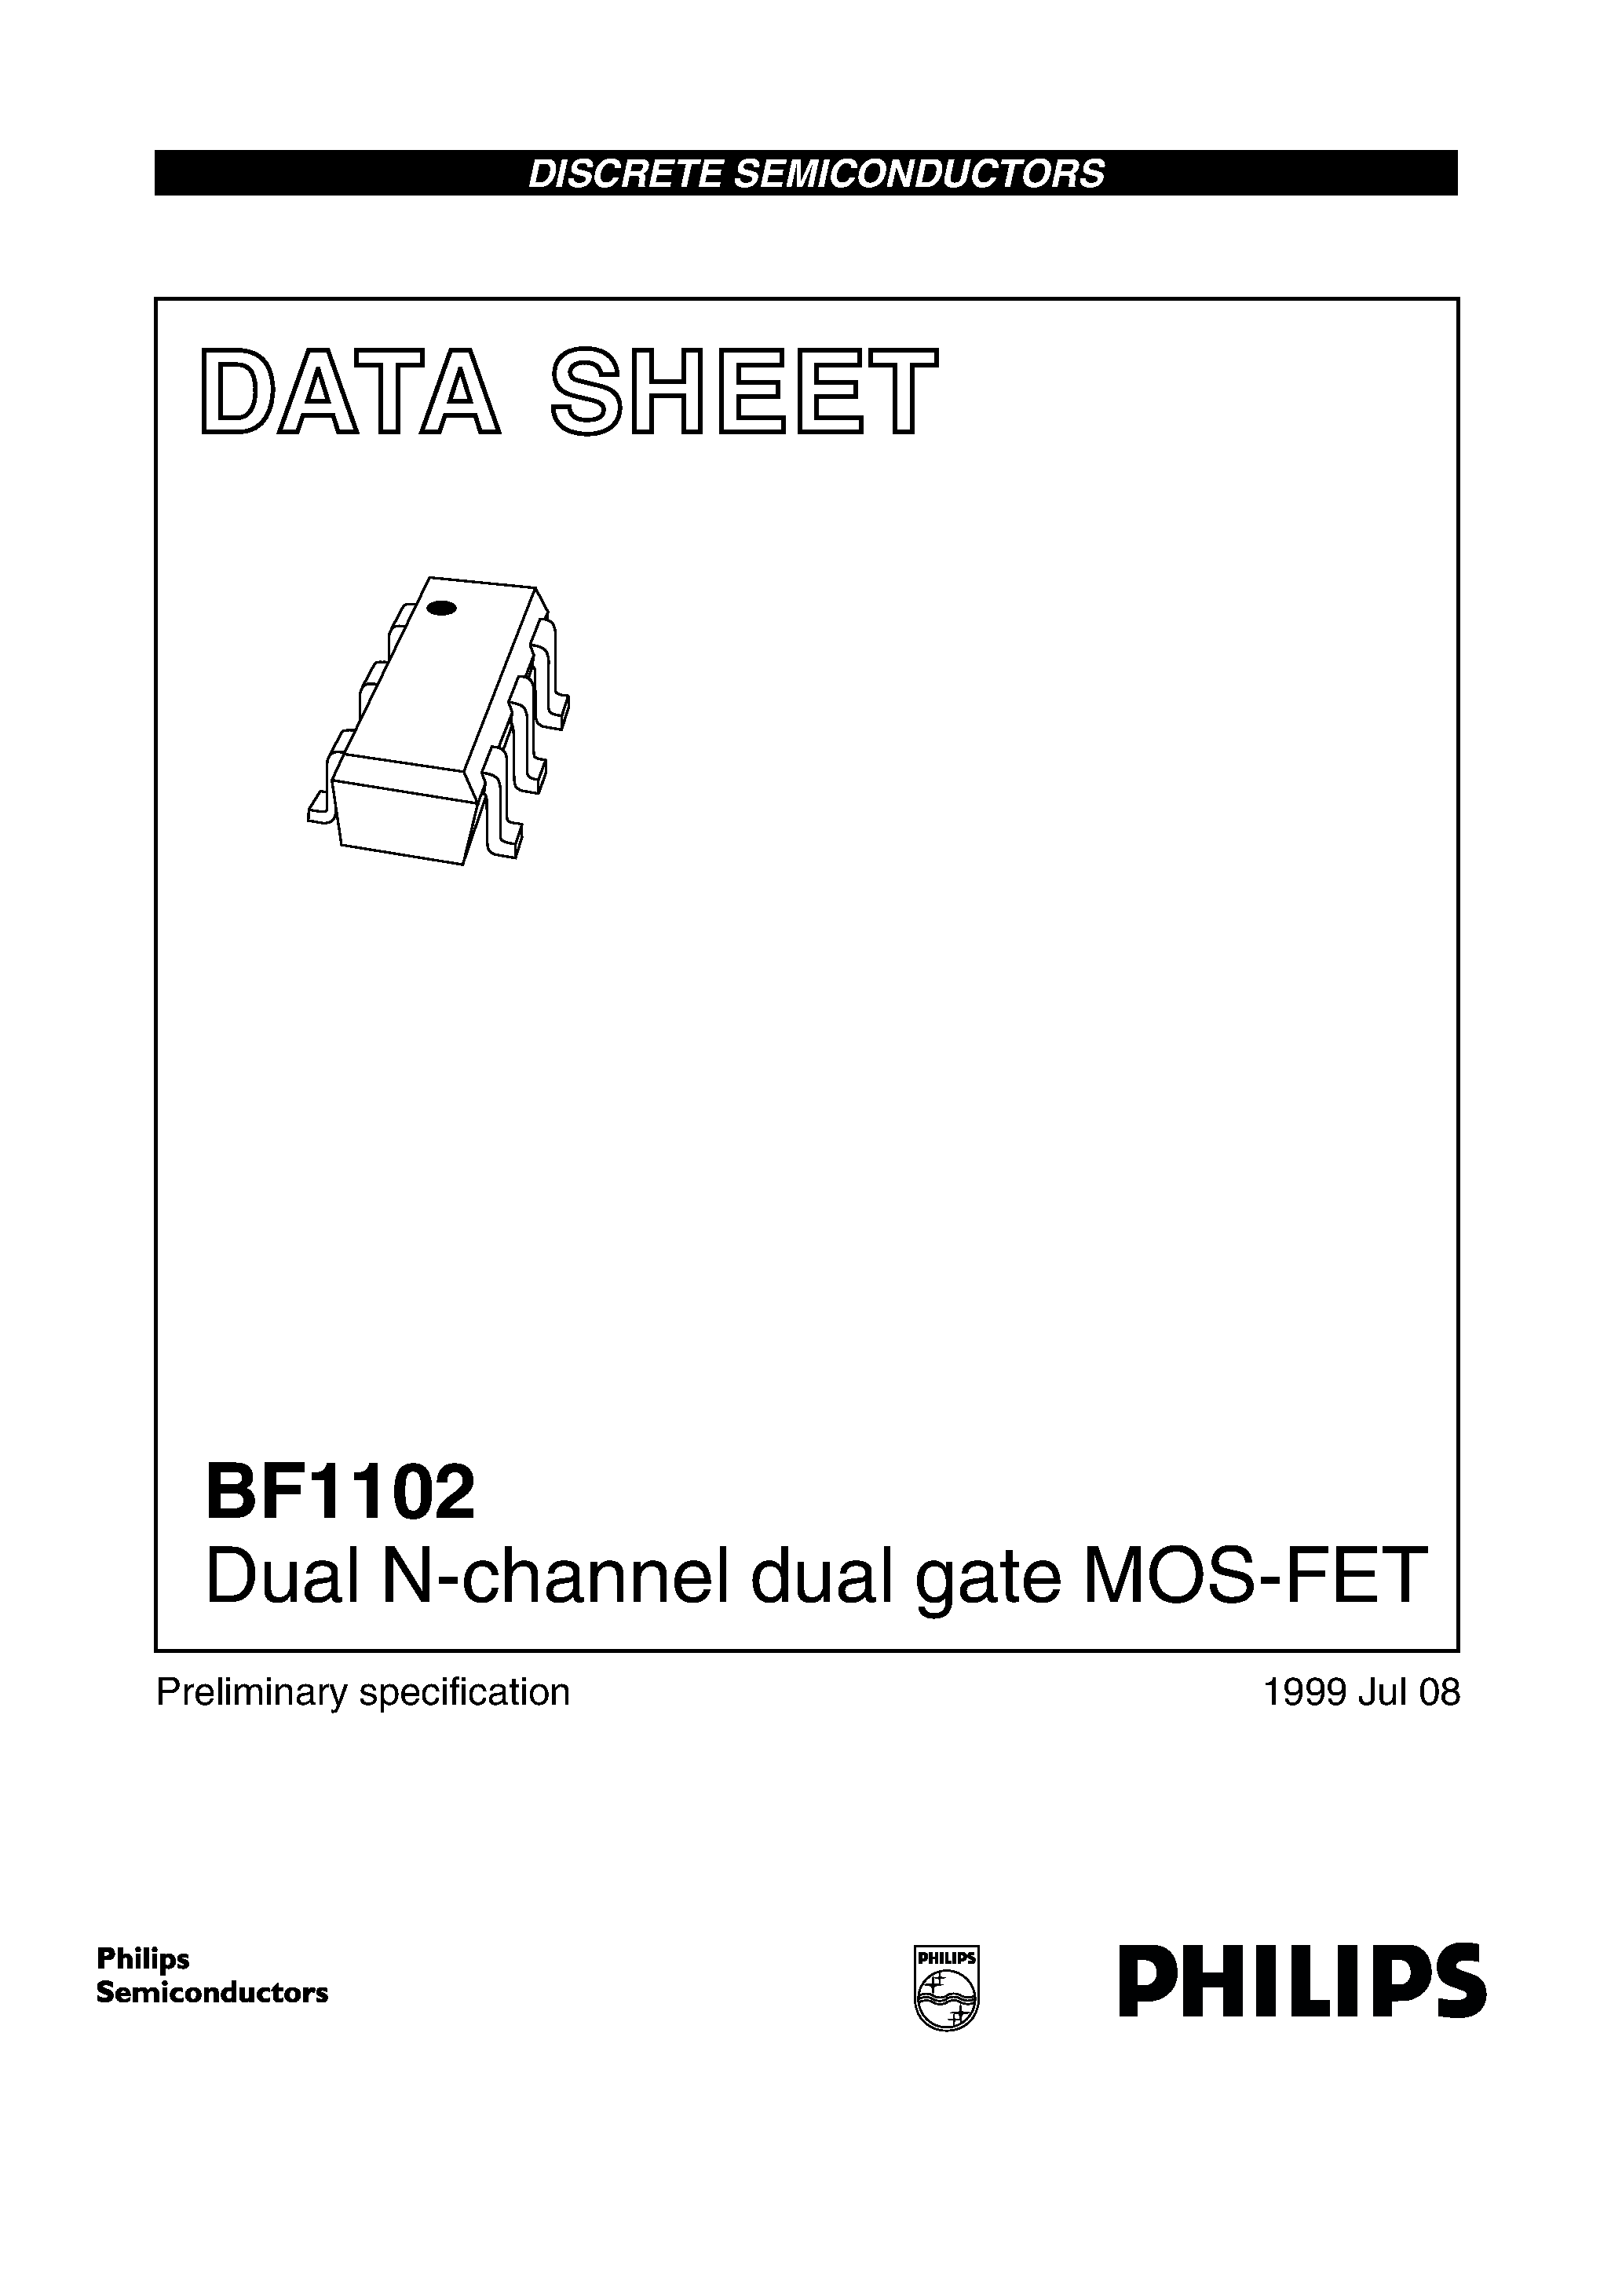 Даташит BF1102 - Dual N-channel dual gate MOS-FET страница 1